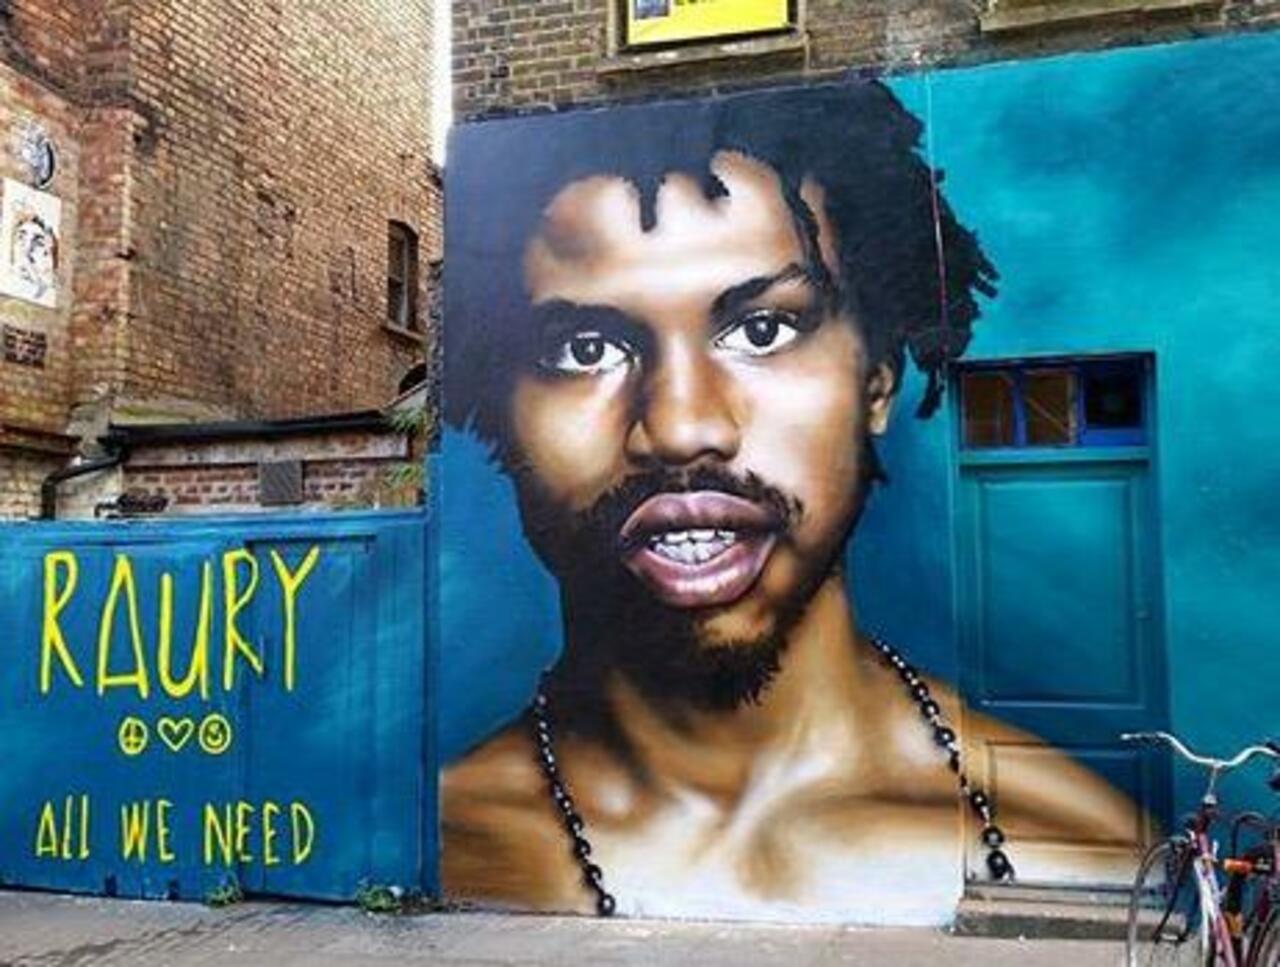 RT belilac "New Street Art of Raury by Olliver Switch in Brick Lane 

#art #graffiti #mural #streetart http://t.co/zdJ2FKO6Nx"